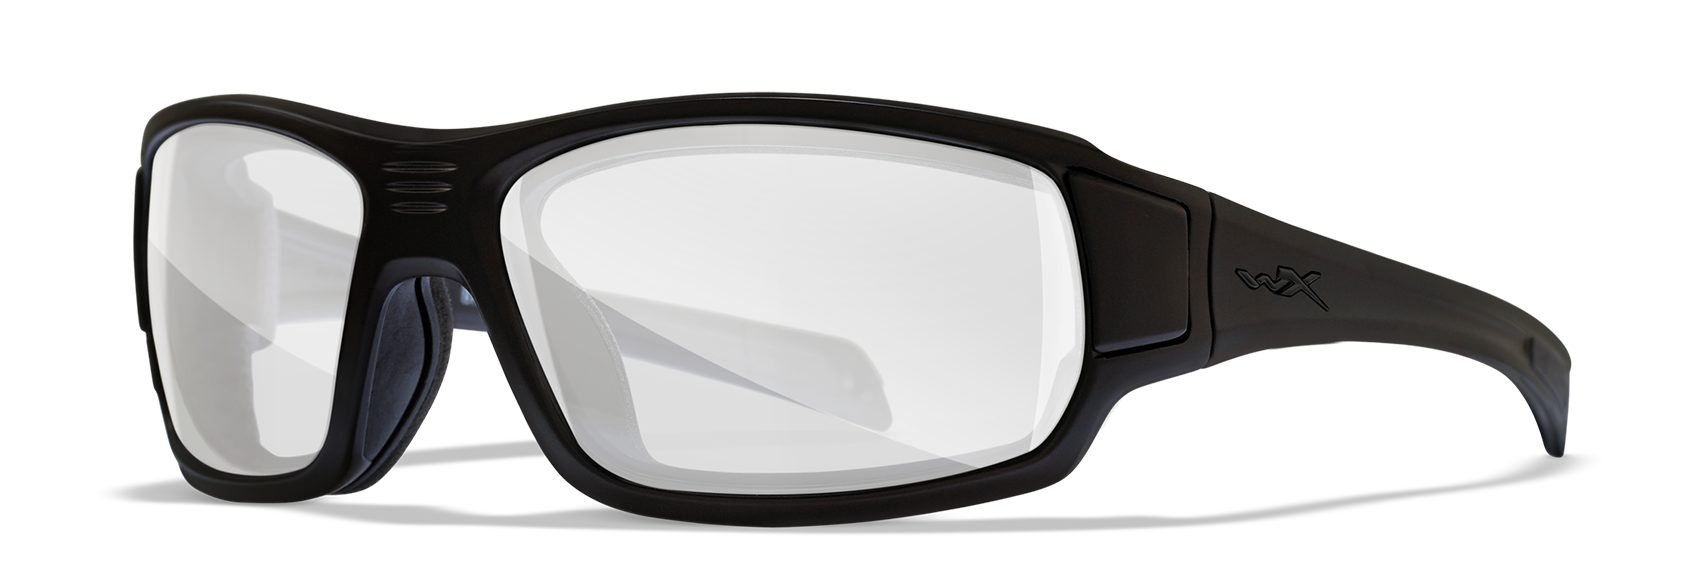 Wiley X WX BREACH Oval Sunglasses  Matte Black 63-15-115